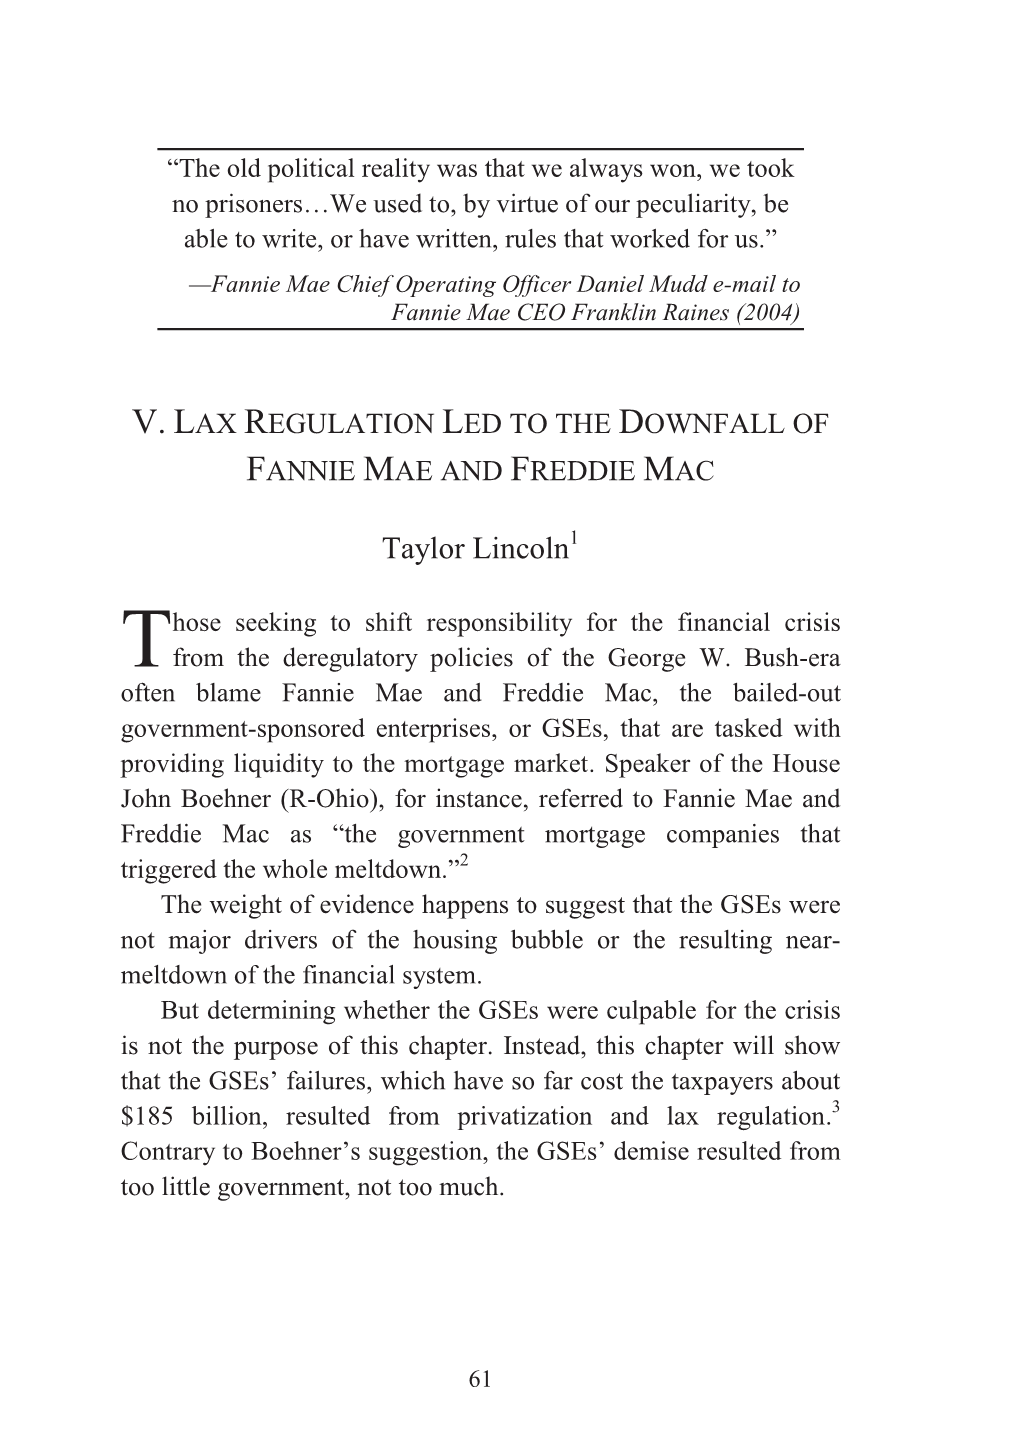 Lax Regulation Led to the Downfall of Fannie Mae and Freddie Mac